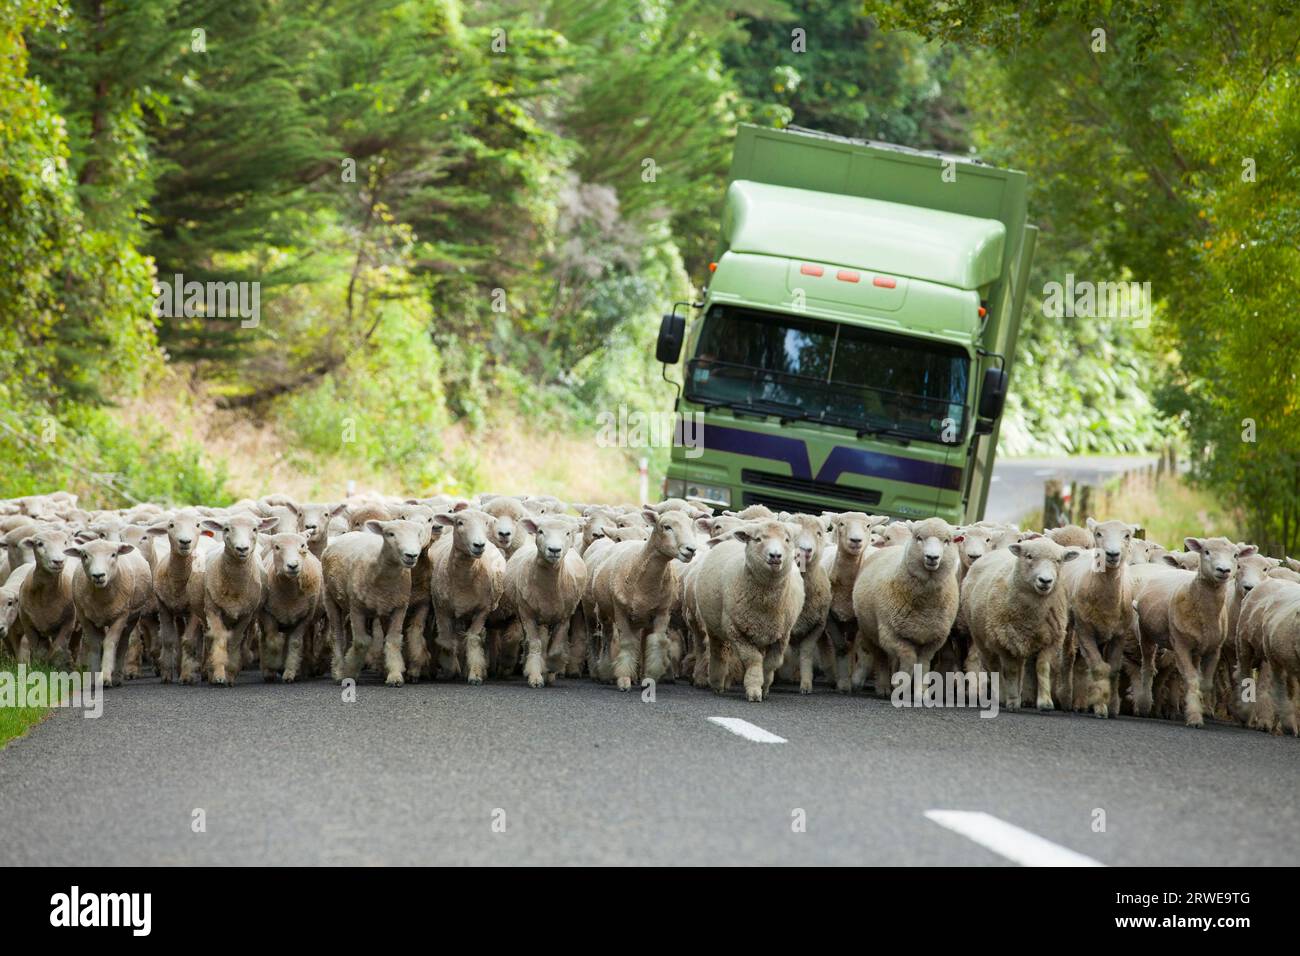 Sheep Farming in New Zealand Stock Photo